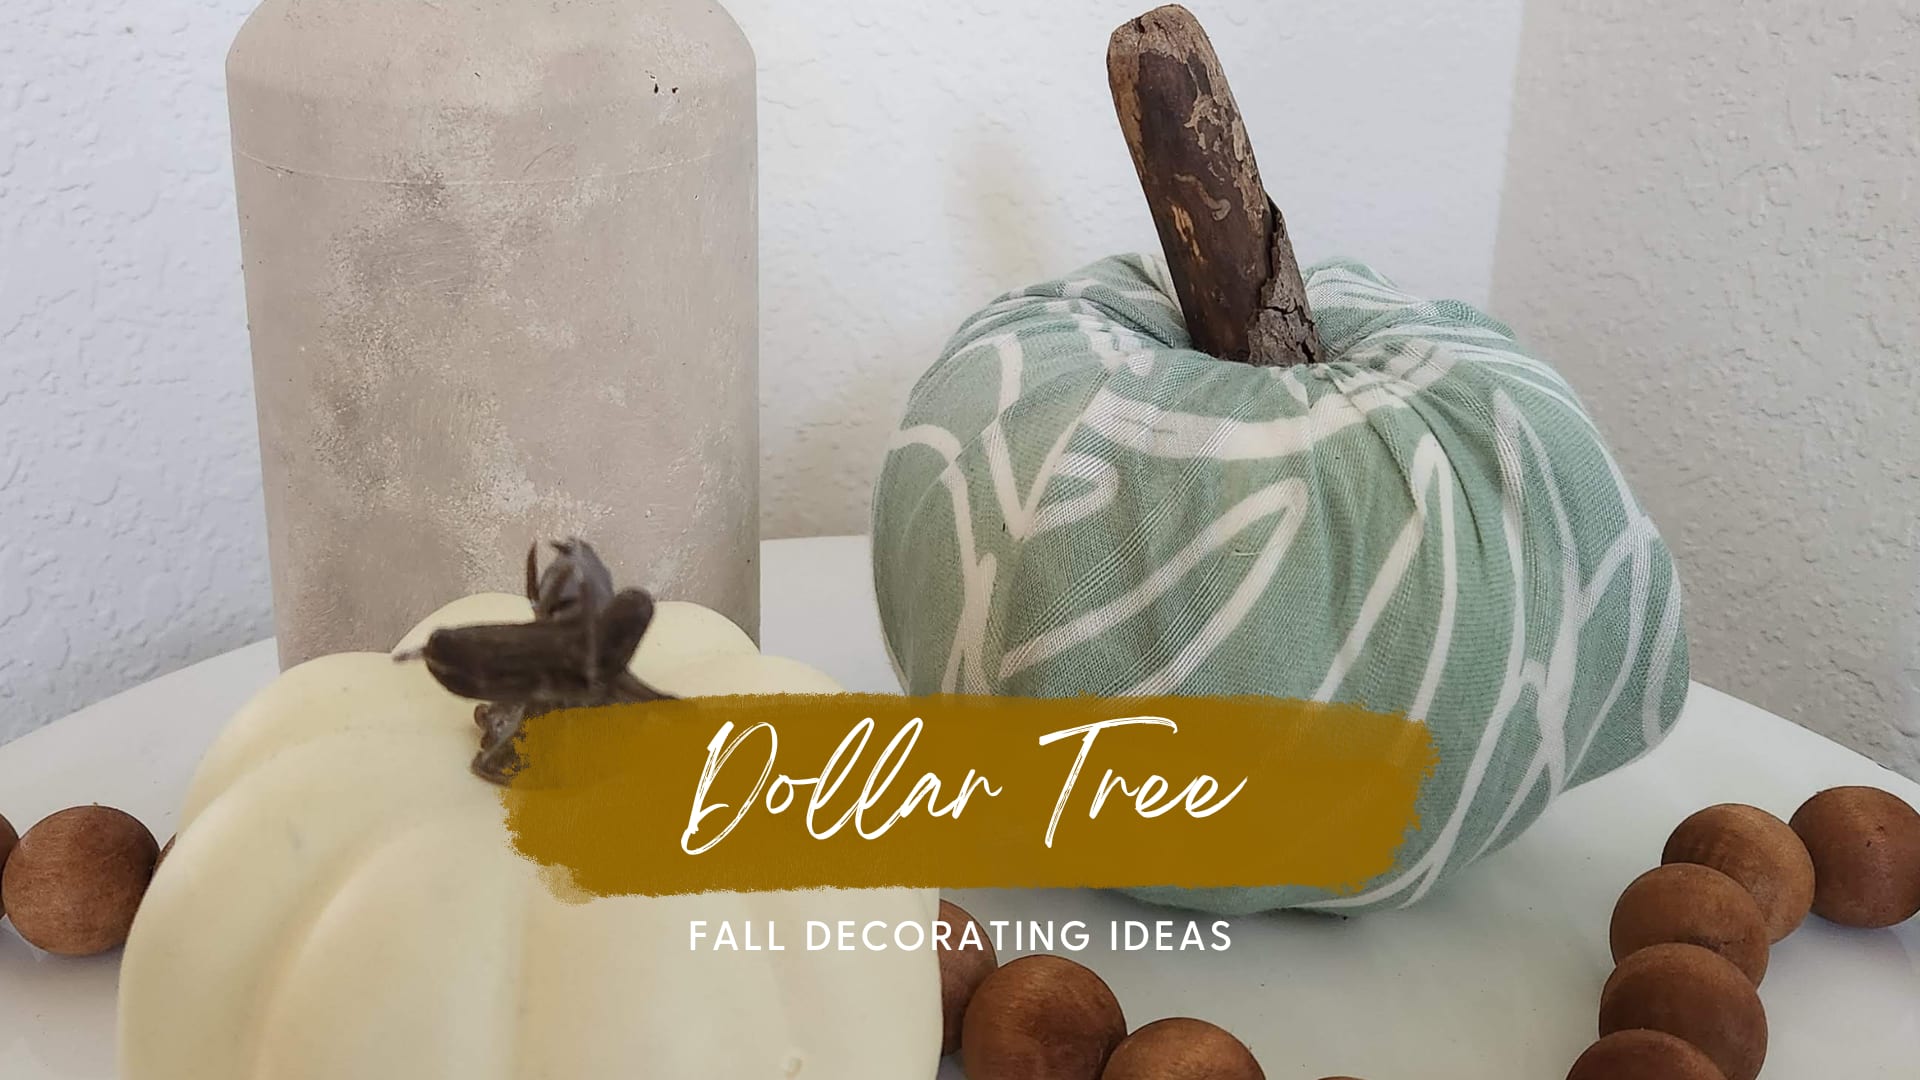 Make a Popsicle Stick Pumpkin Fall Decor DIY wit Dollar Tree items